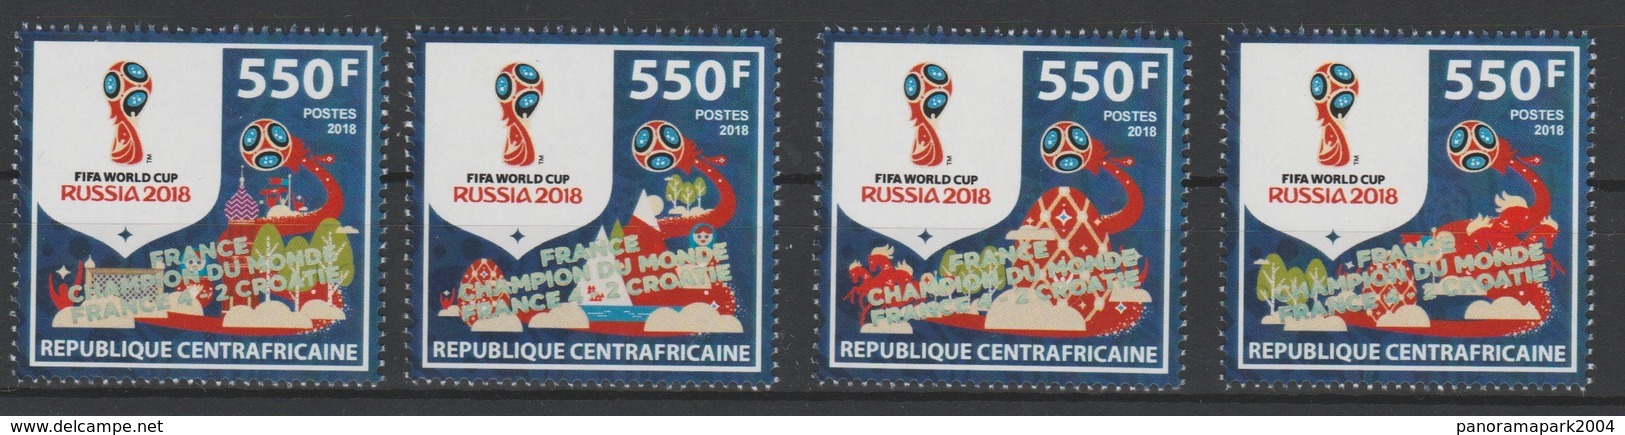 Centrafrique 2018 Surch. Ovpt. "FRANCE CHAMPION" FIFA World Cup WM Coupe Du Monde Russie Russia Football Fußball Soccer - Zentralafrik. Republik